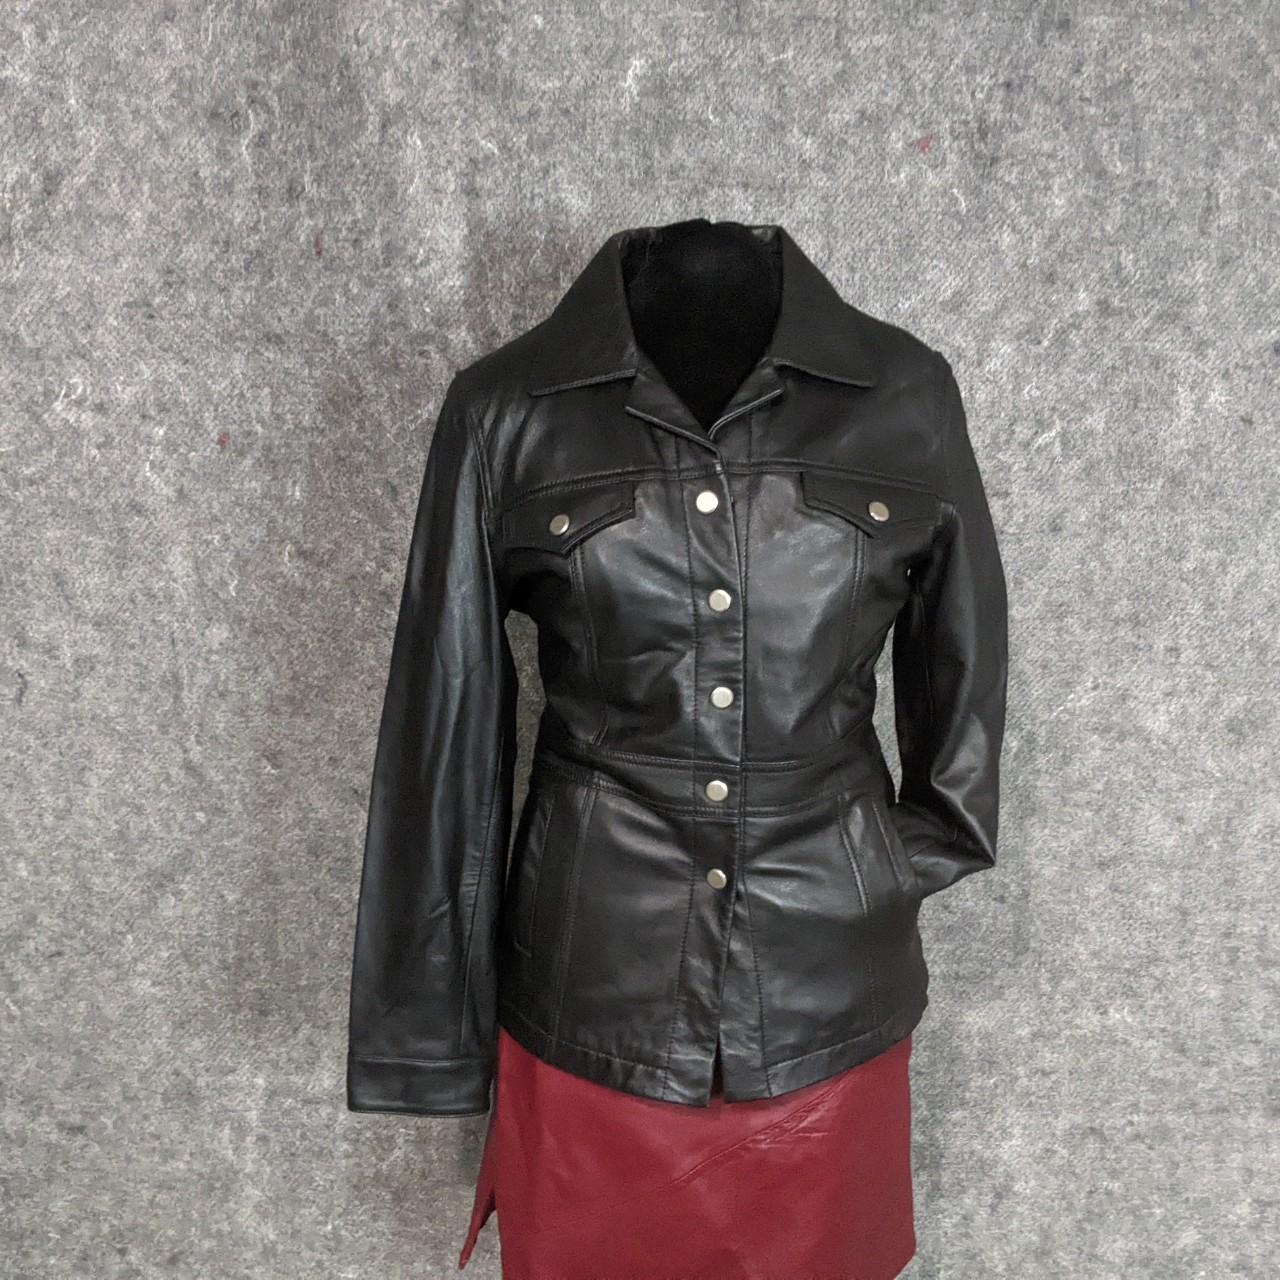 Product Image 1 - #Vintage #90s Women's #Leather #Jacket
It